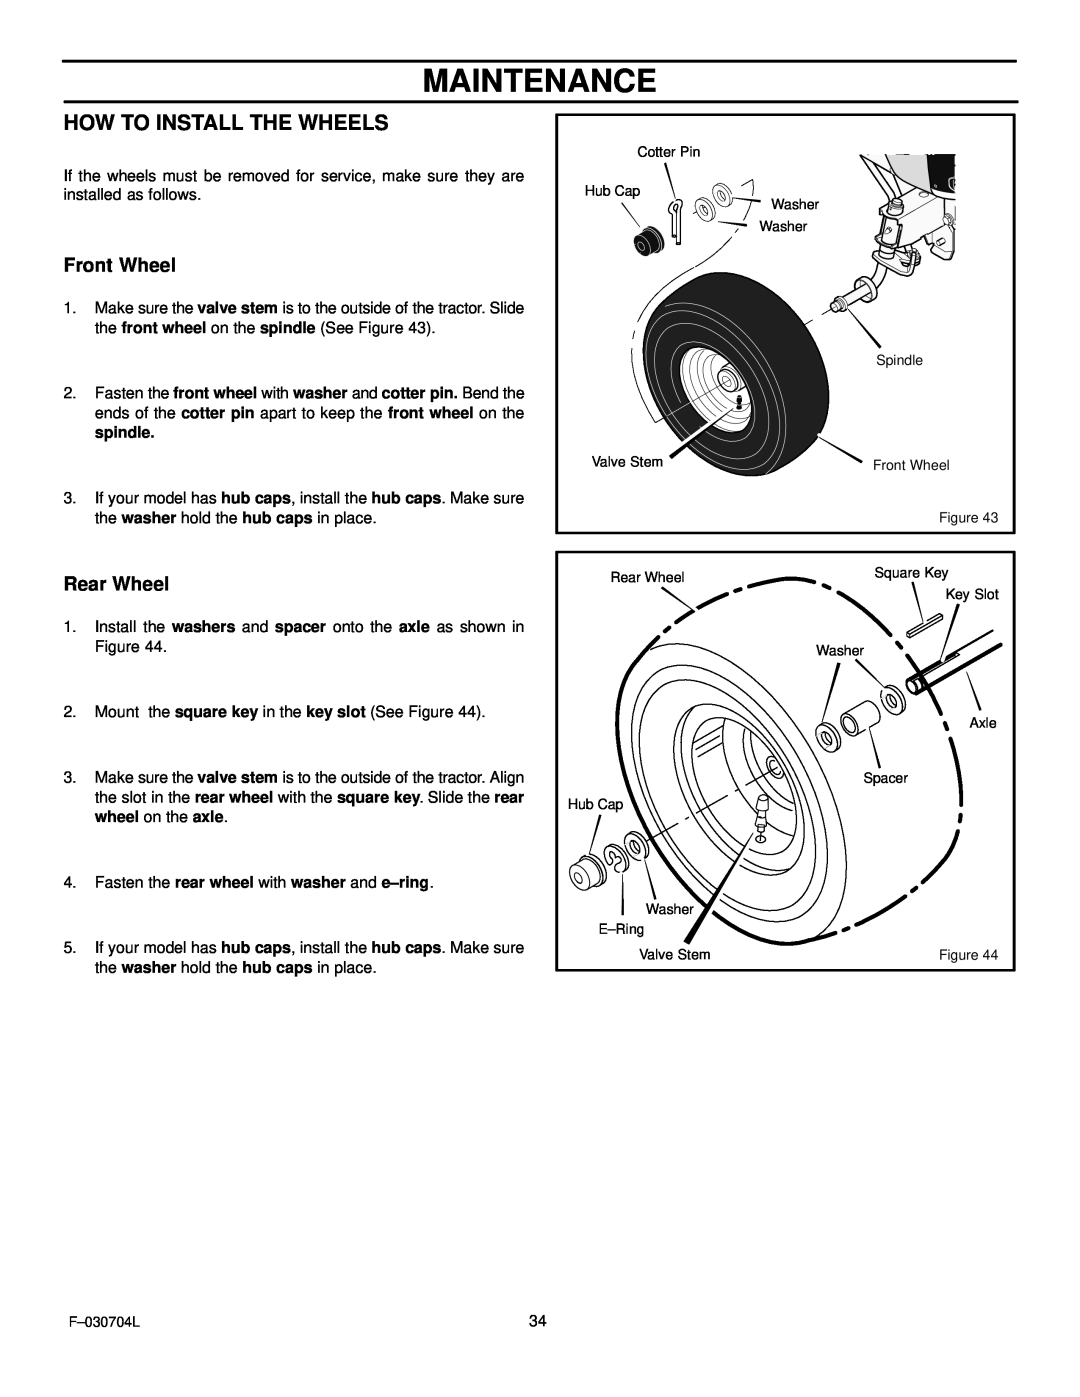 Murray 425303x92B manual Maintenance, How To Install The Wheels, Front Wheel, Rear Wheel 